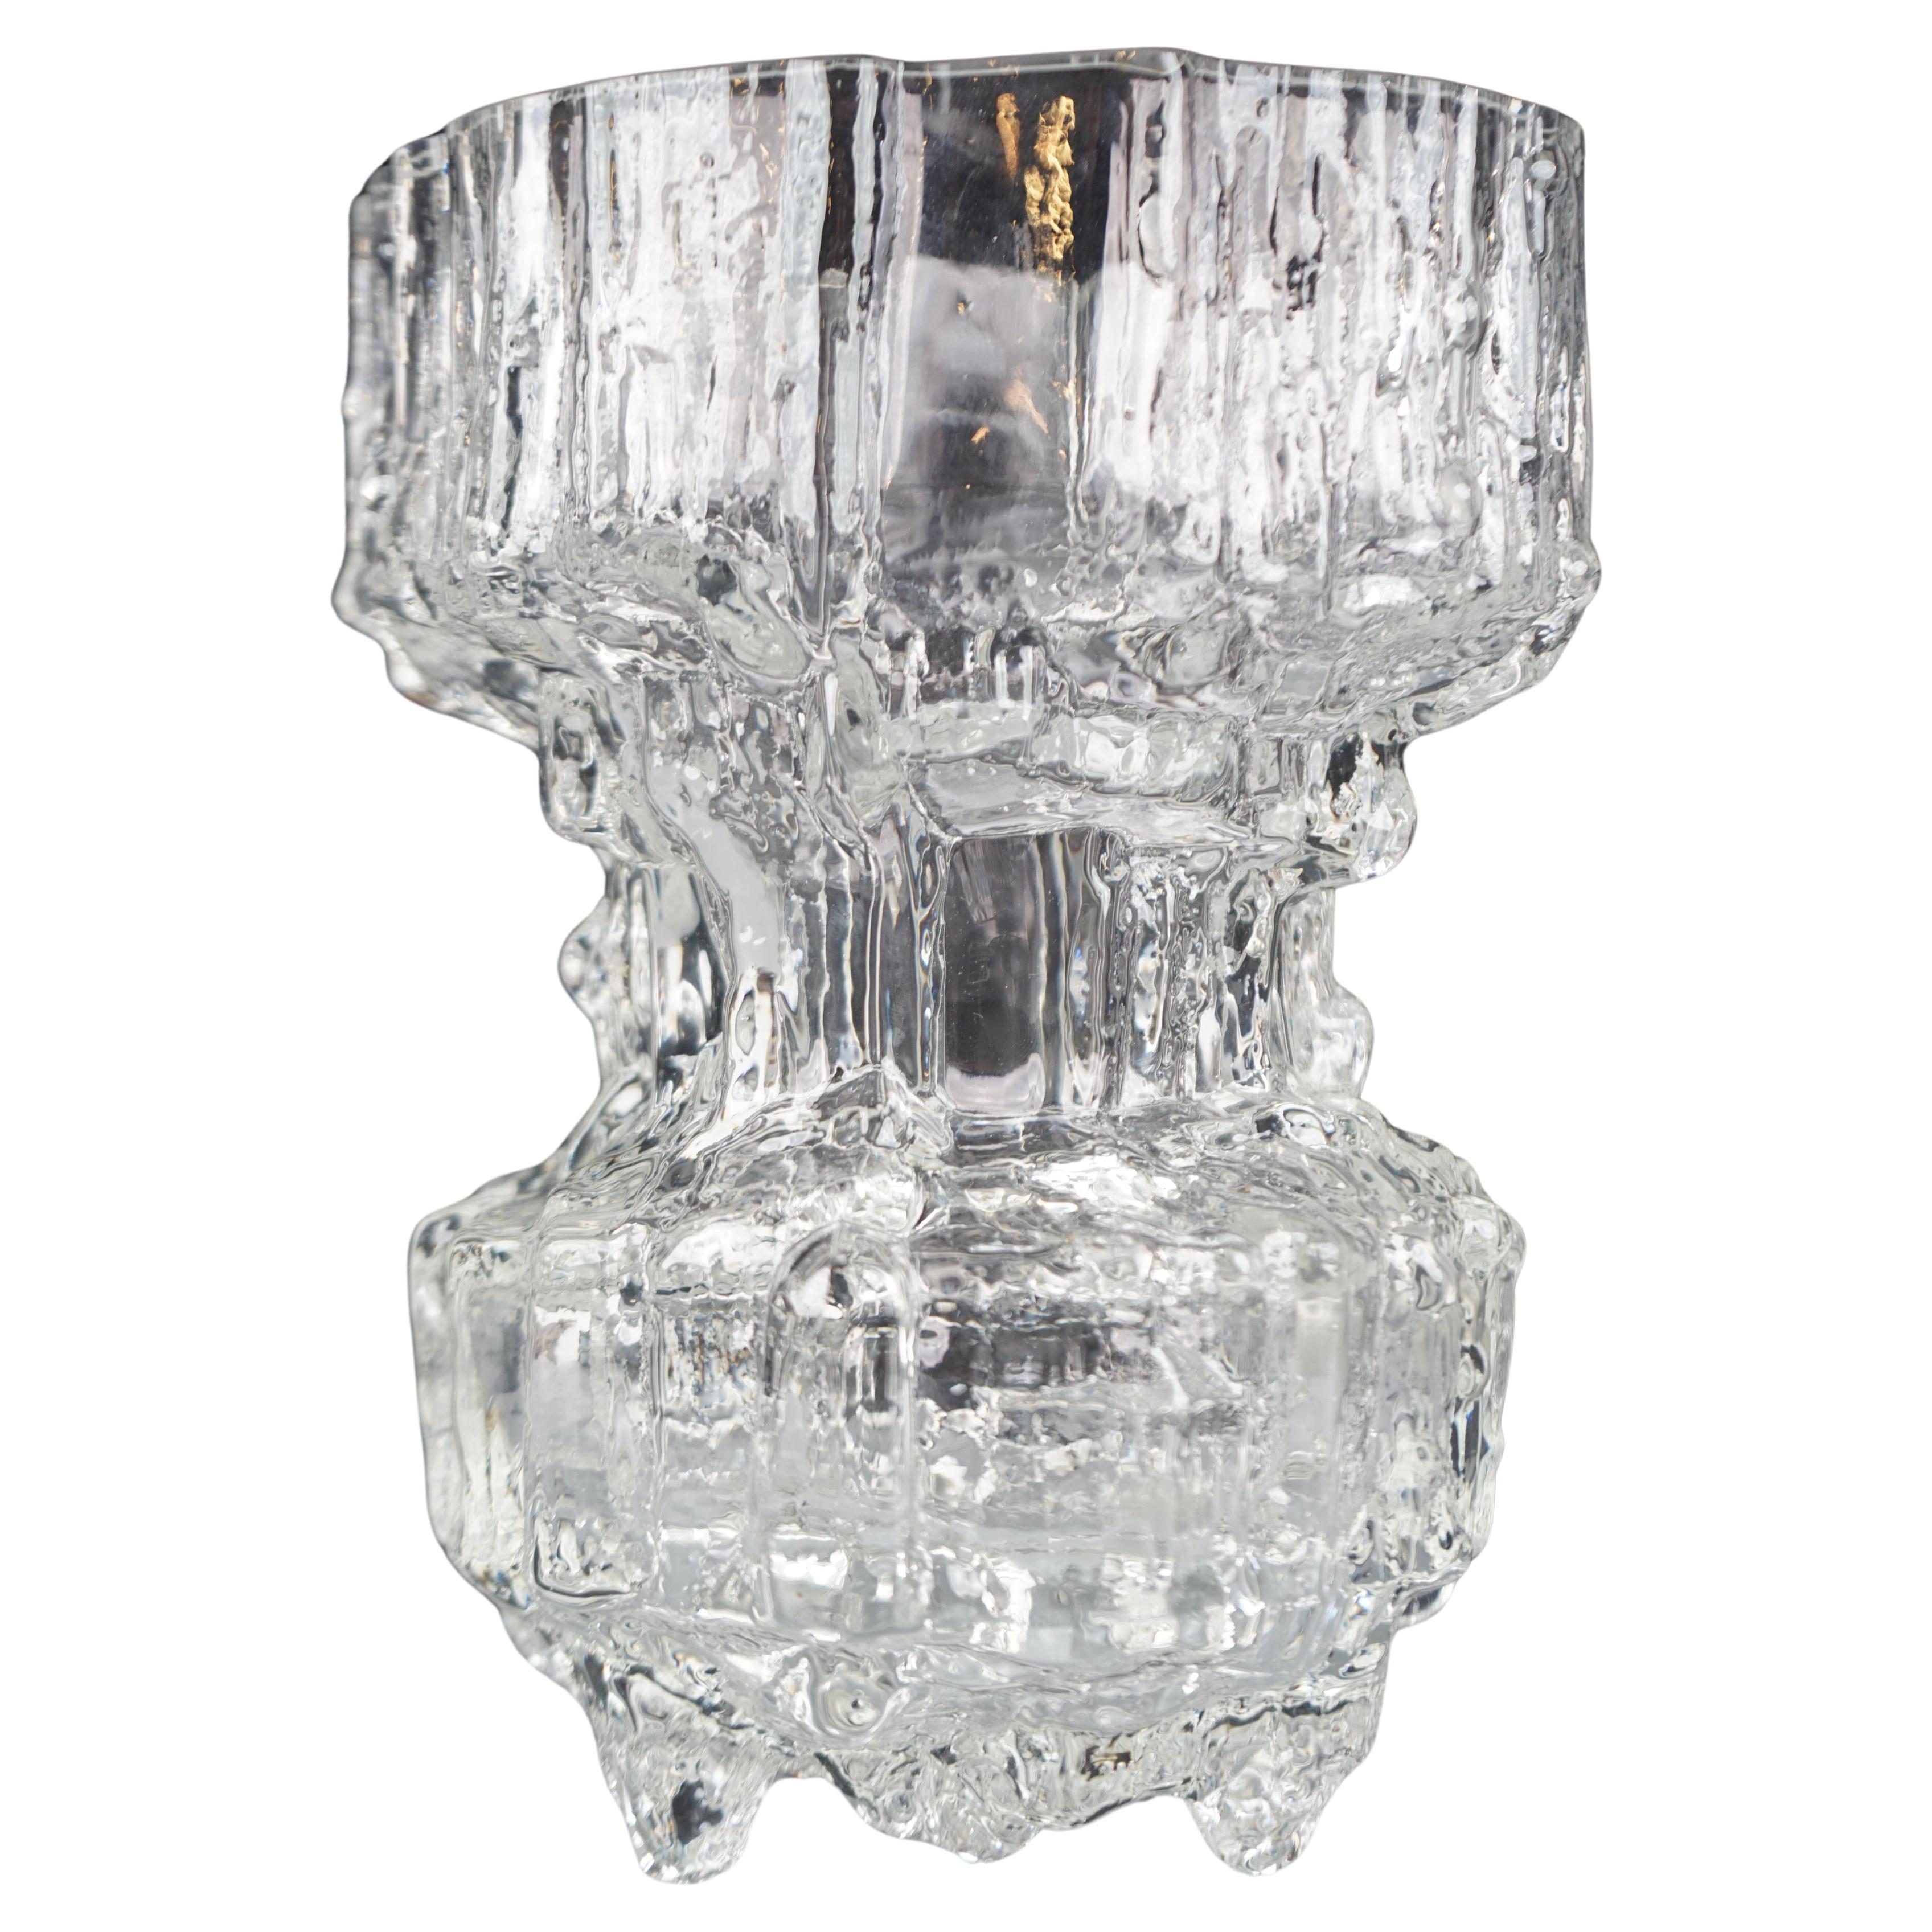 Tapio Wirkkala, Vase "Inari" Glass Dish Model No. 3411 for Iittala Oy For Sale